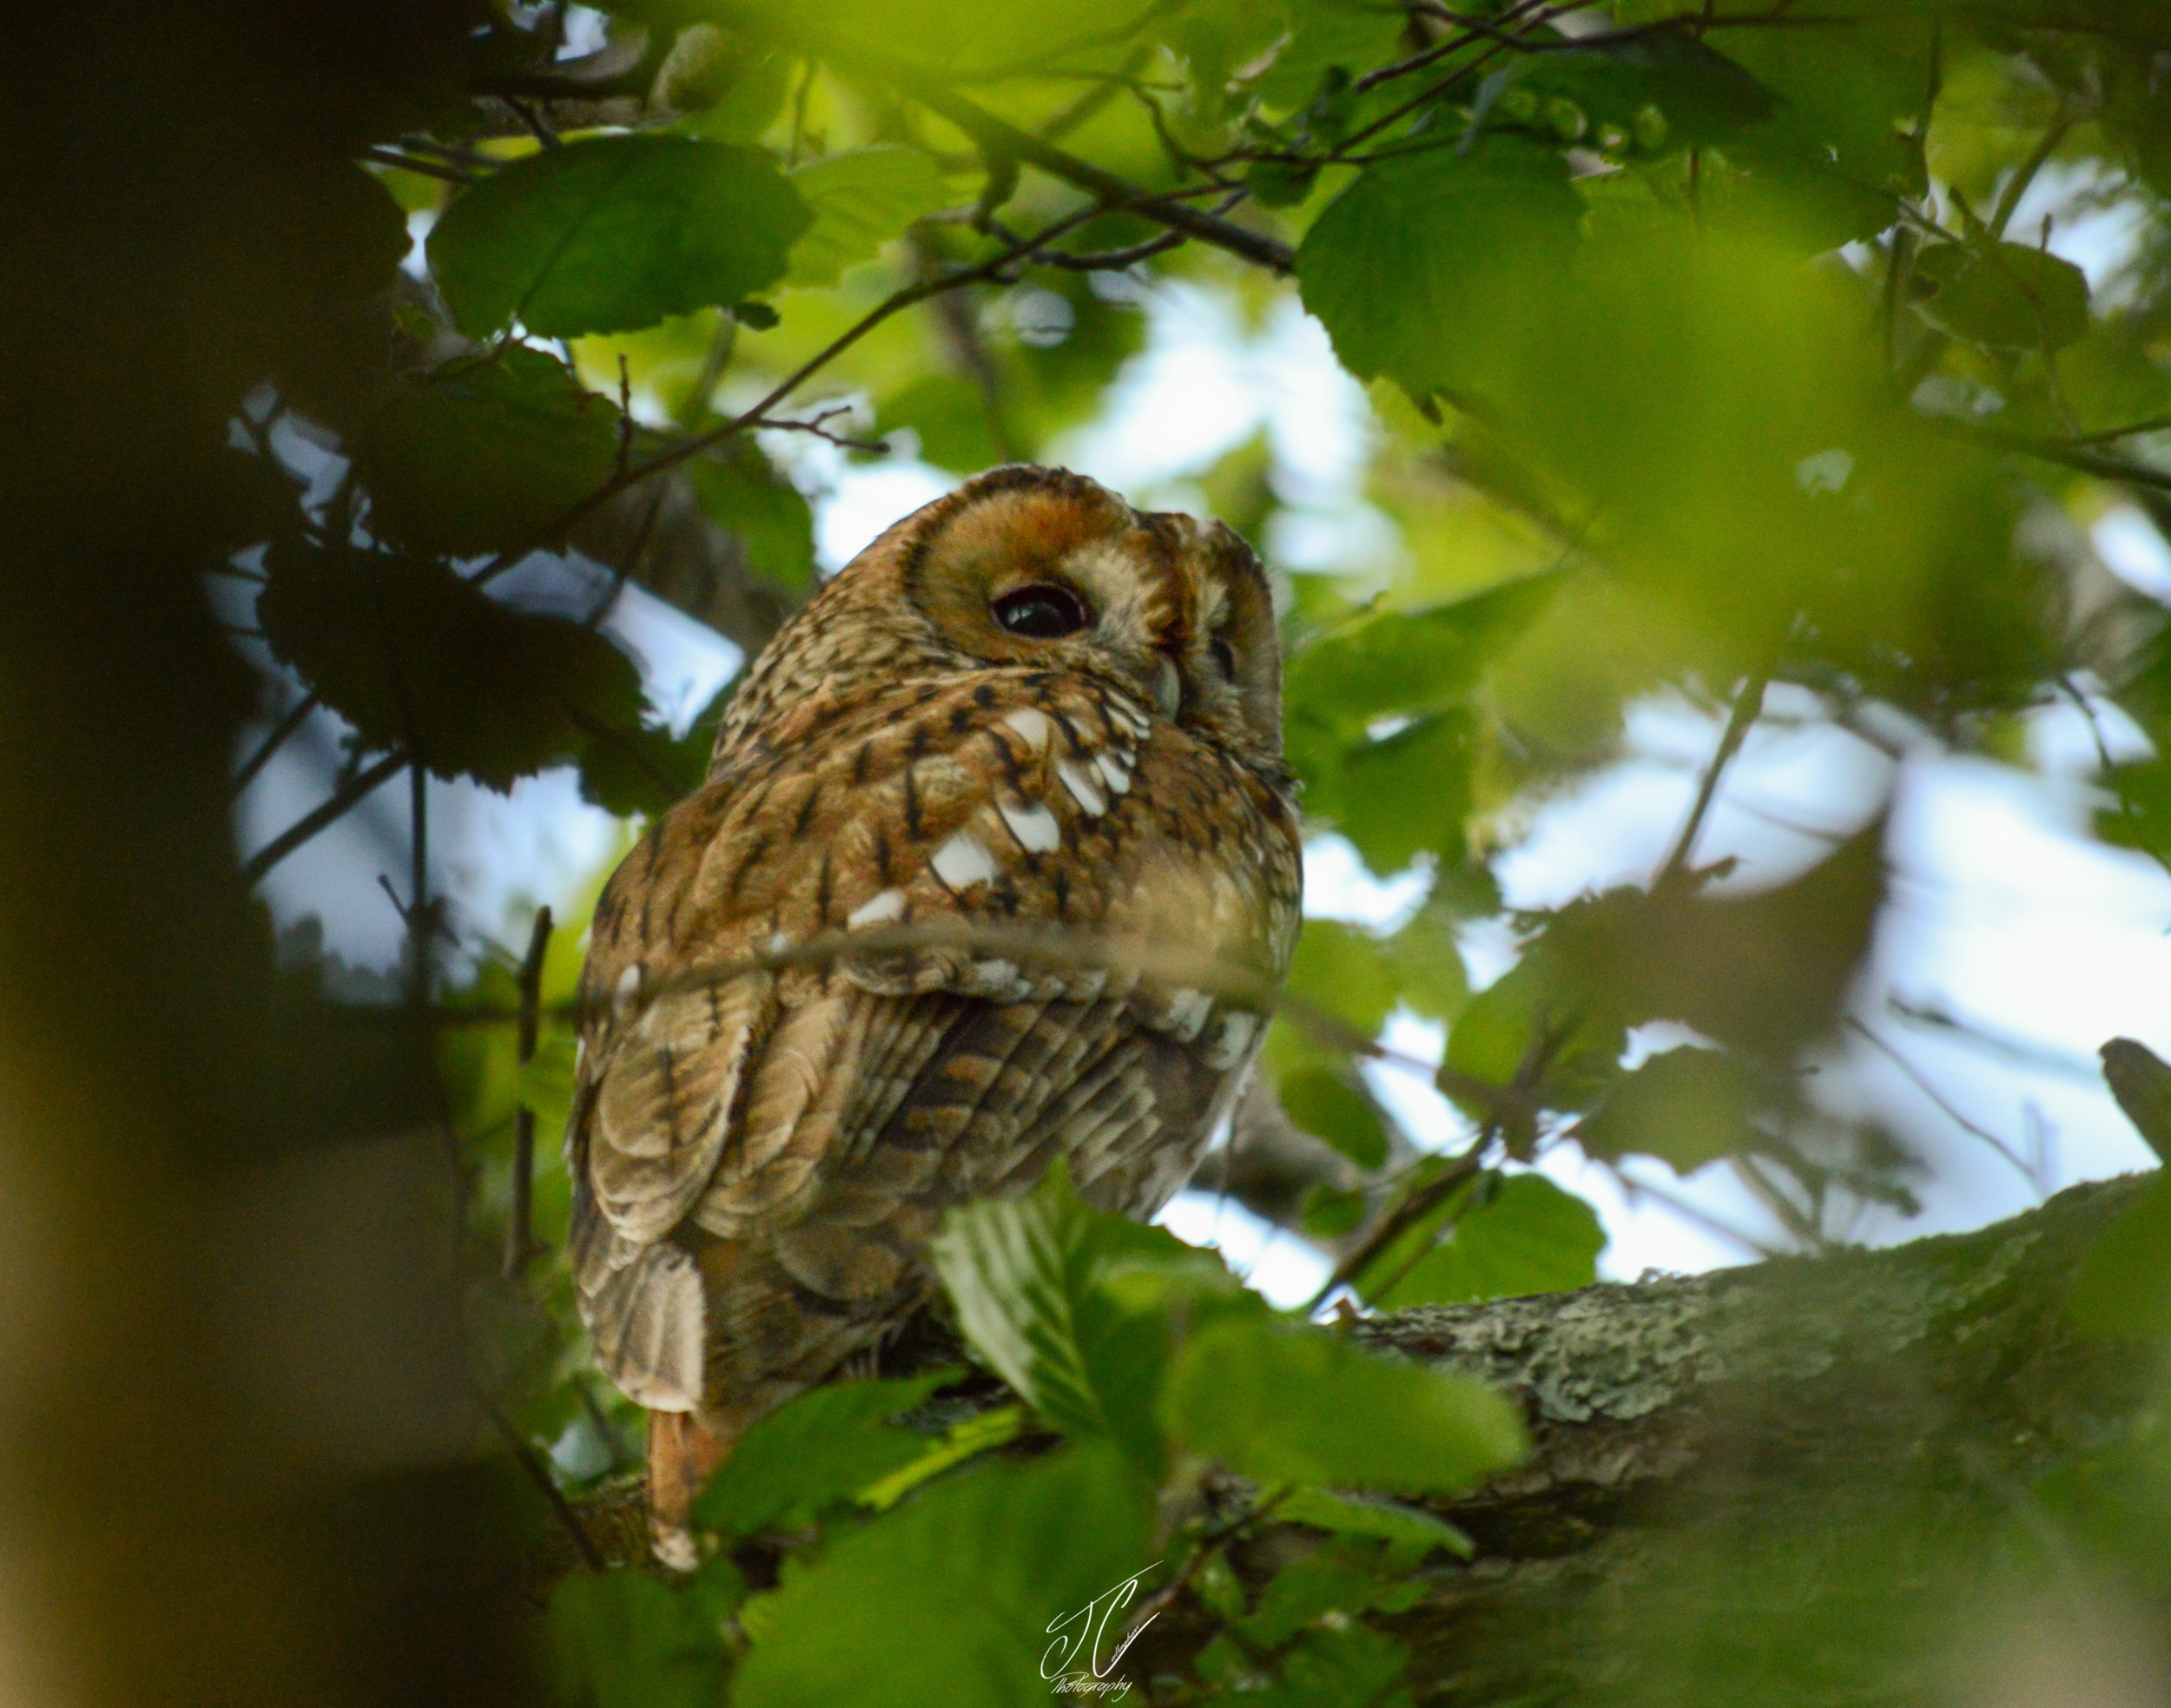   Tawny Owl. Photo by Jordan Callaghan  